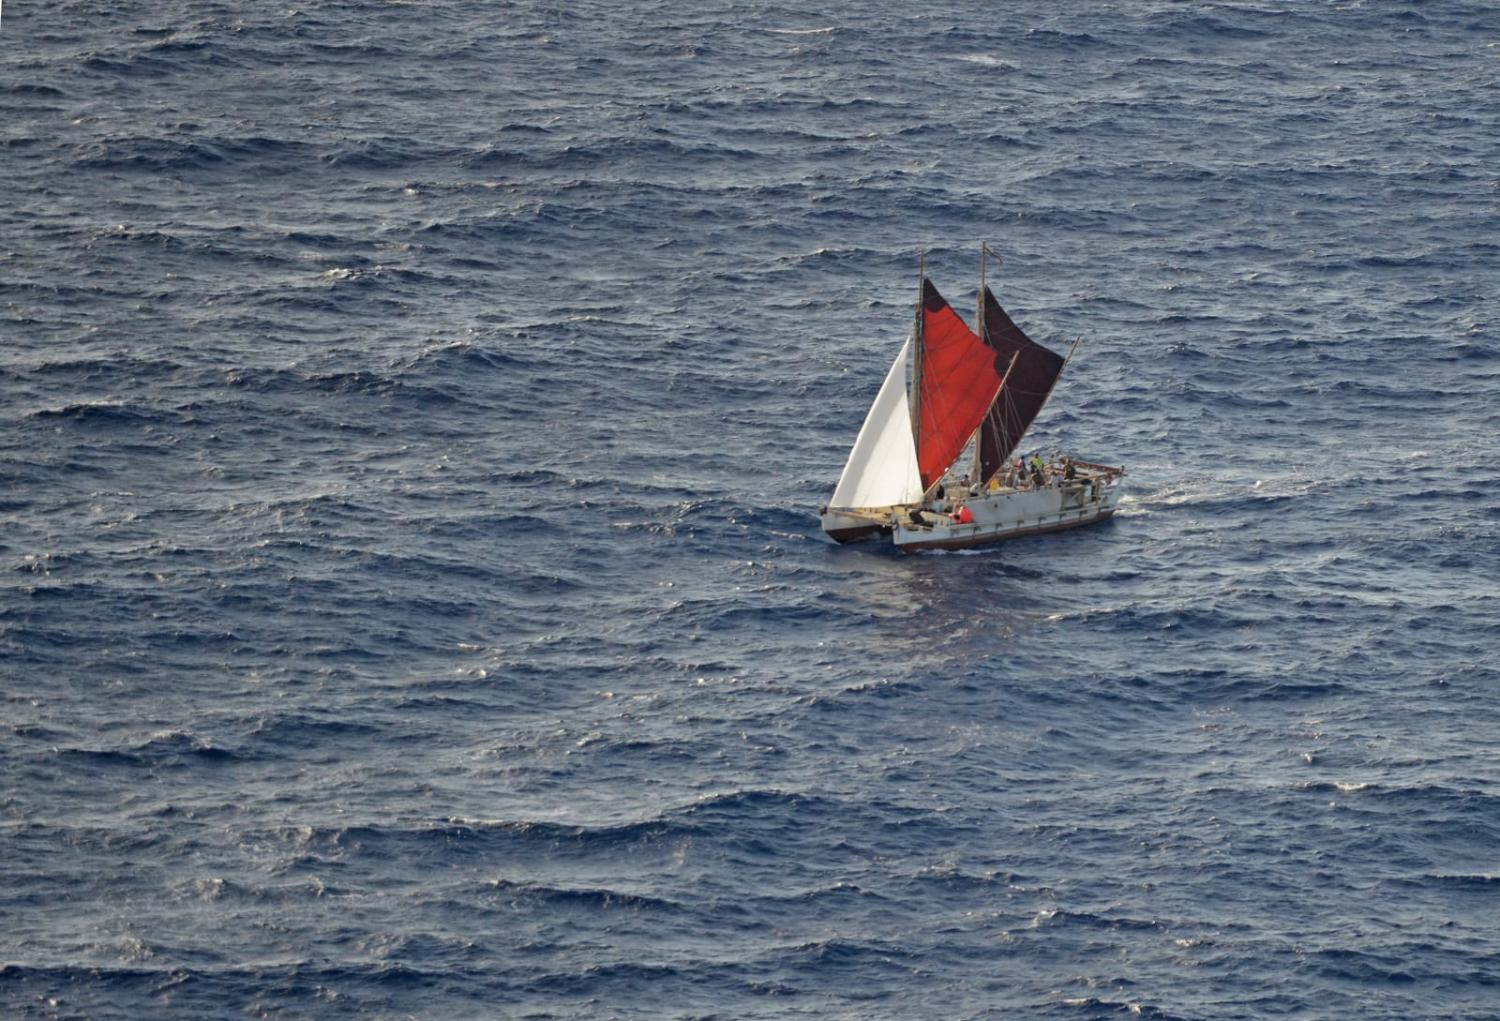 Hōkūleʻa, a Polynesian double-hulled voyaging canoe (Tara Molle/US Coast Guard)